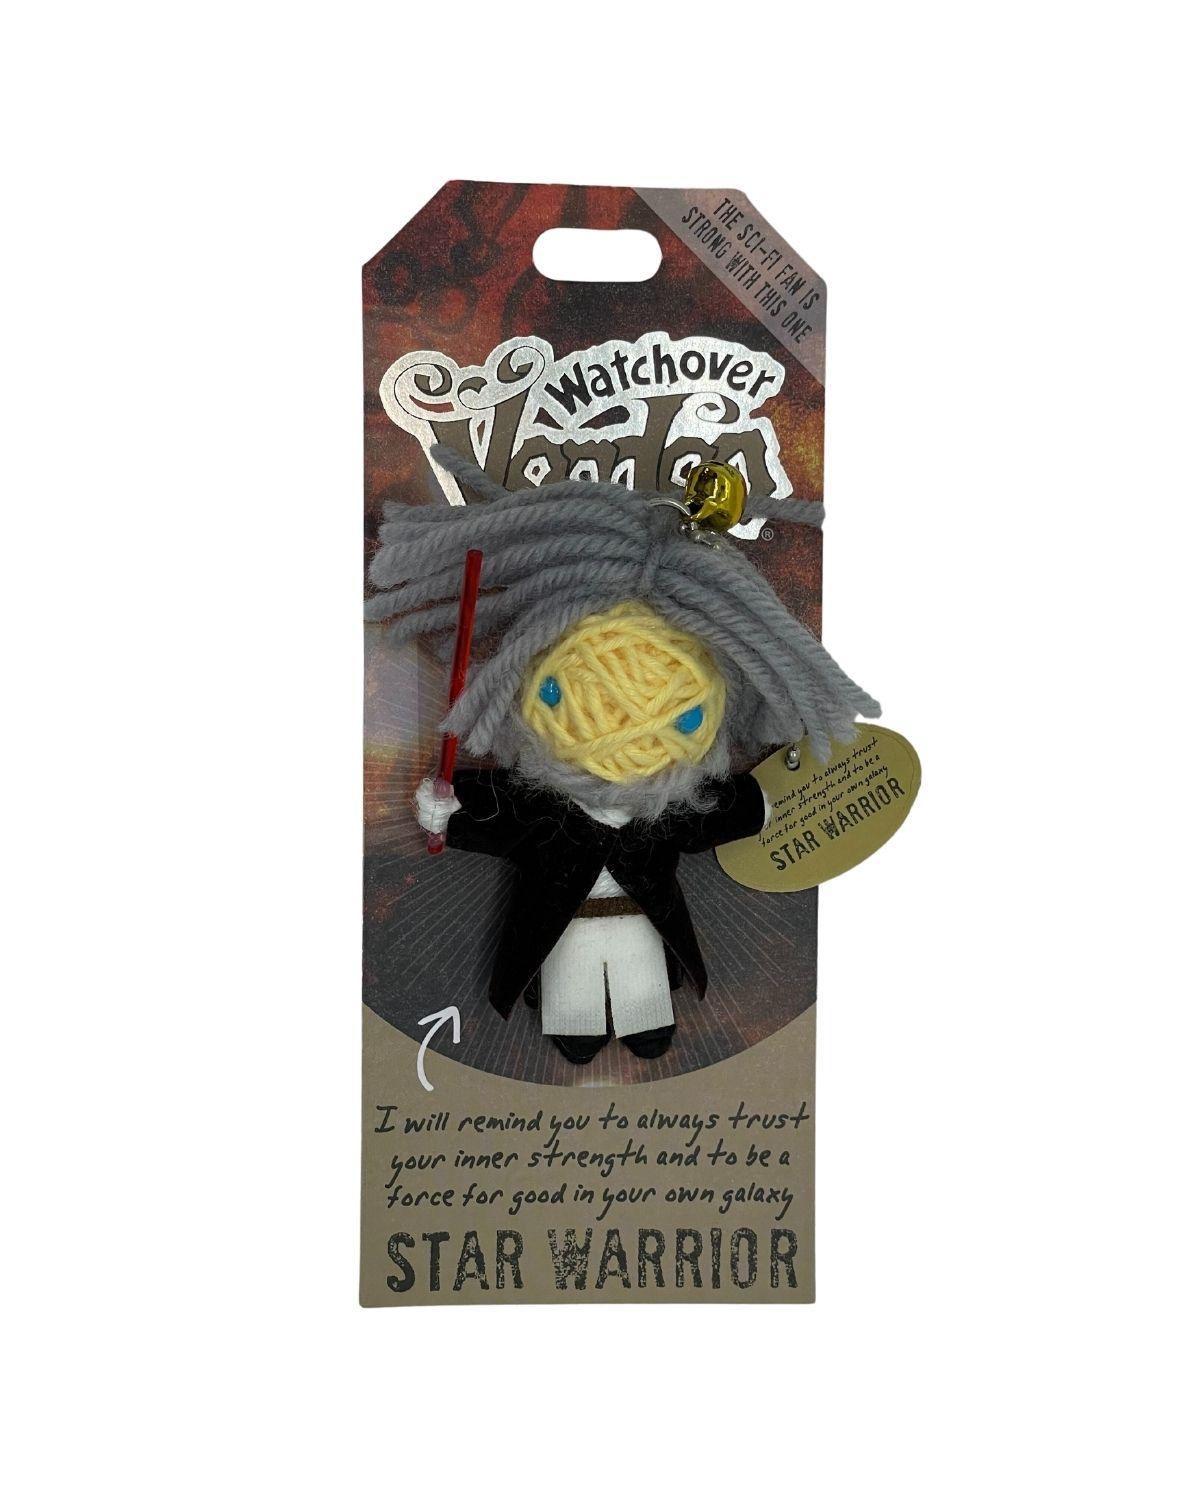 Watchover Voodoo Doll - Star Warrior - Watchover Voodoo - String Doll